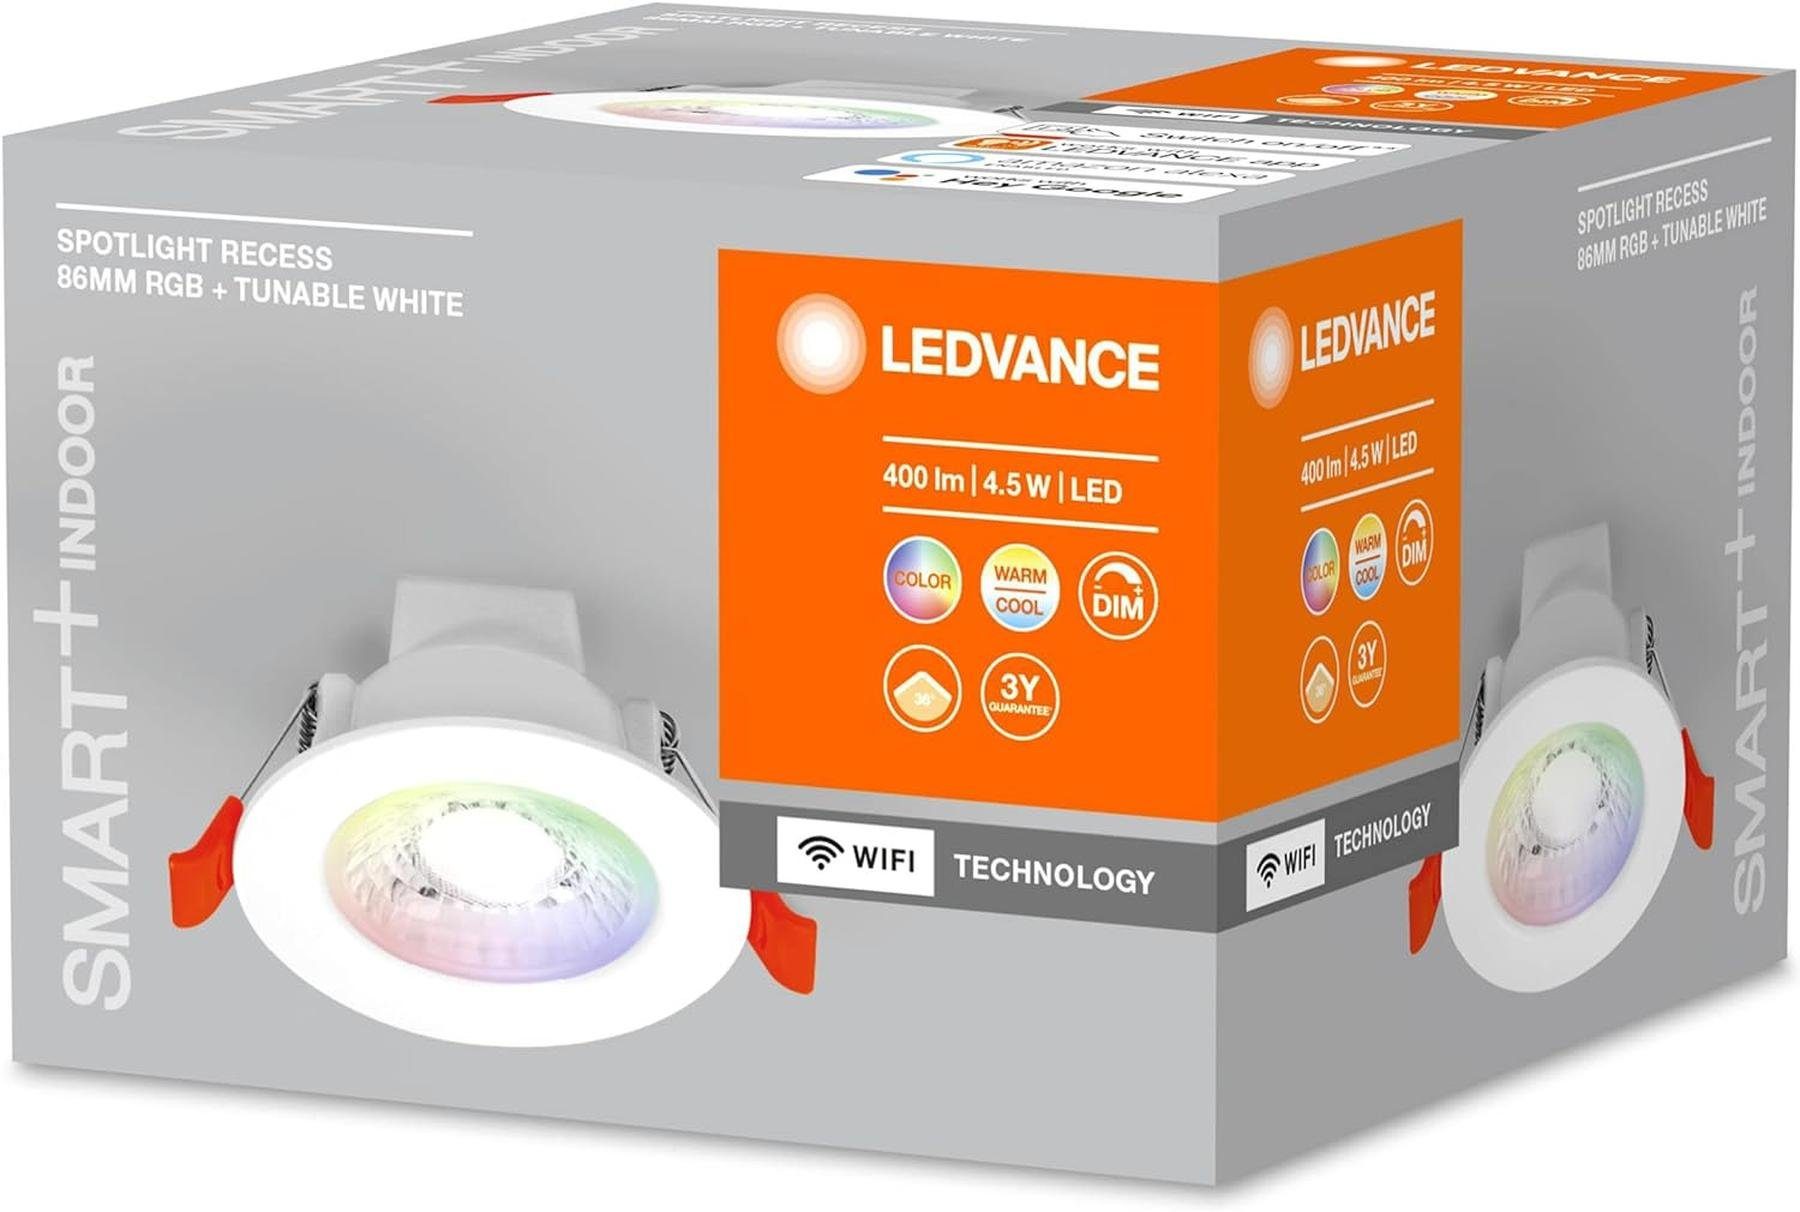 38°Winkel LED Ledvance Farbtemperatur Dimmbar RGB Deckenspot Recess Spotlight LED LEDVANCE